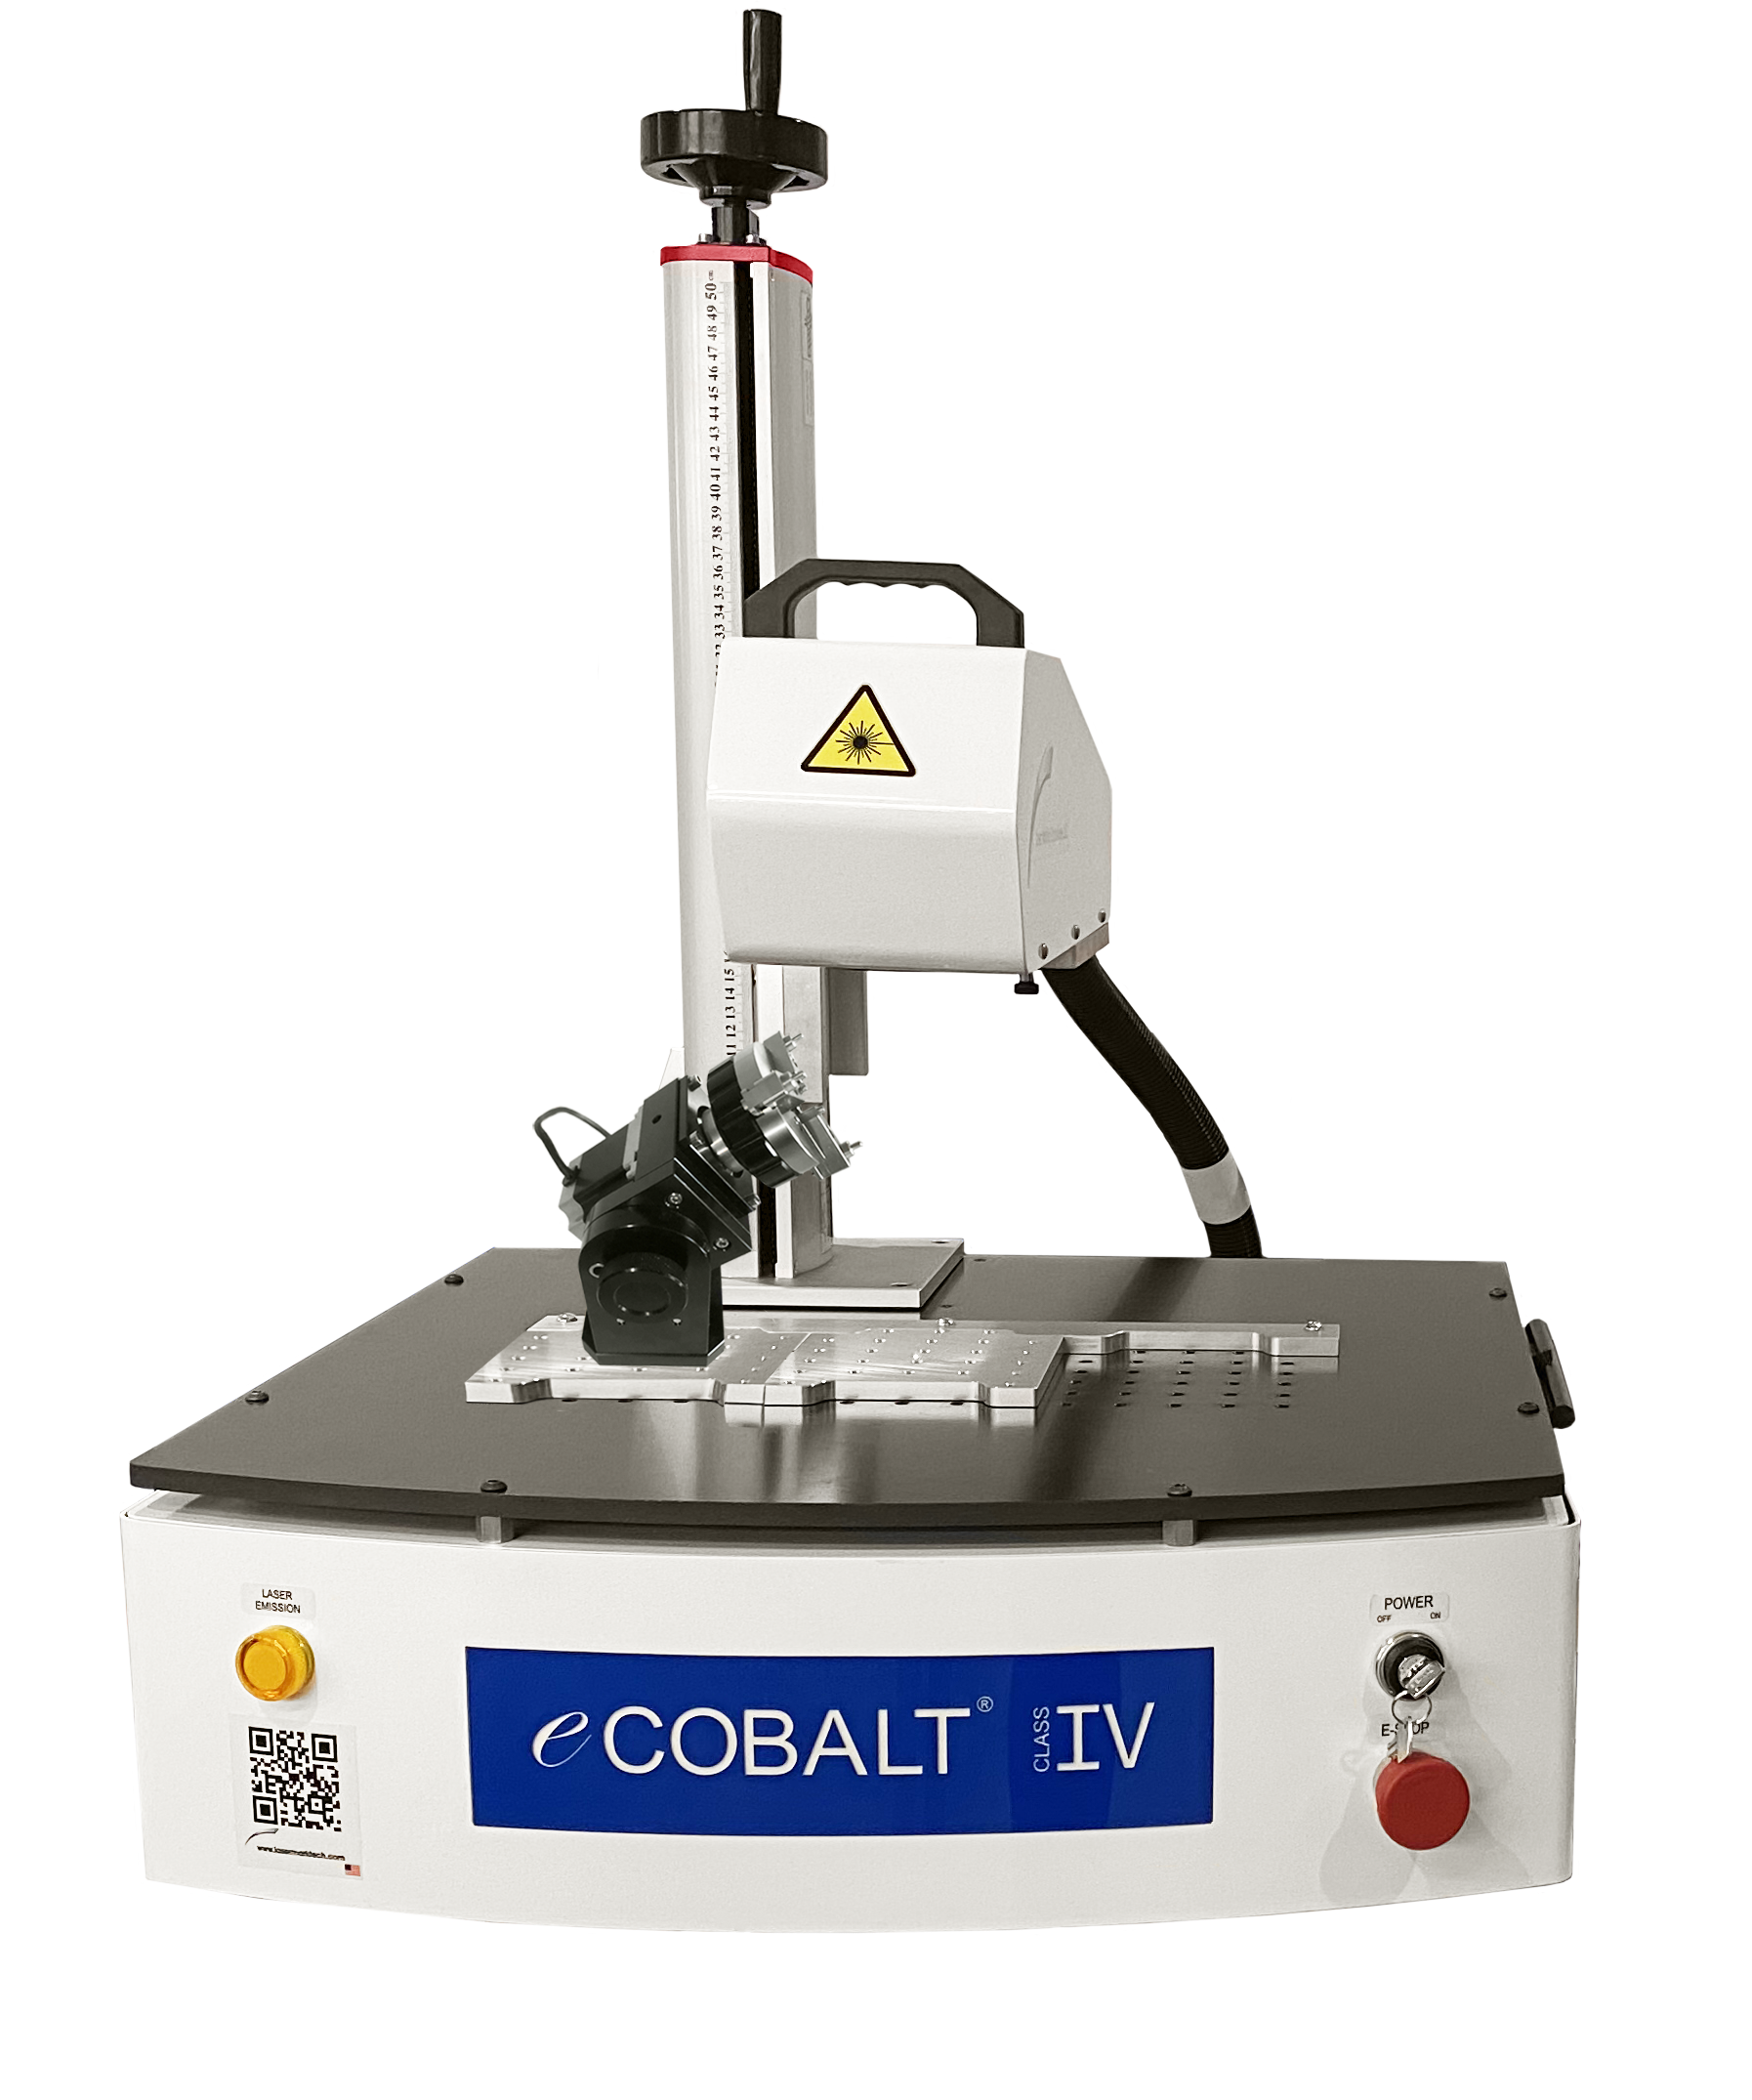 eCobalt Class IV laser marking machine front view